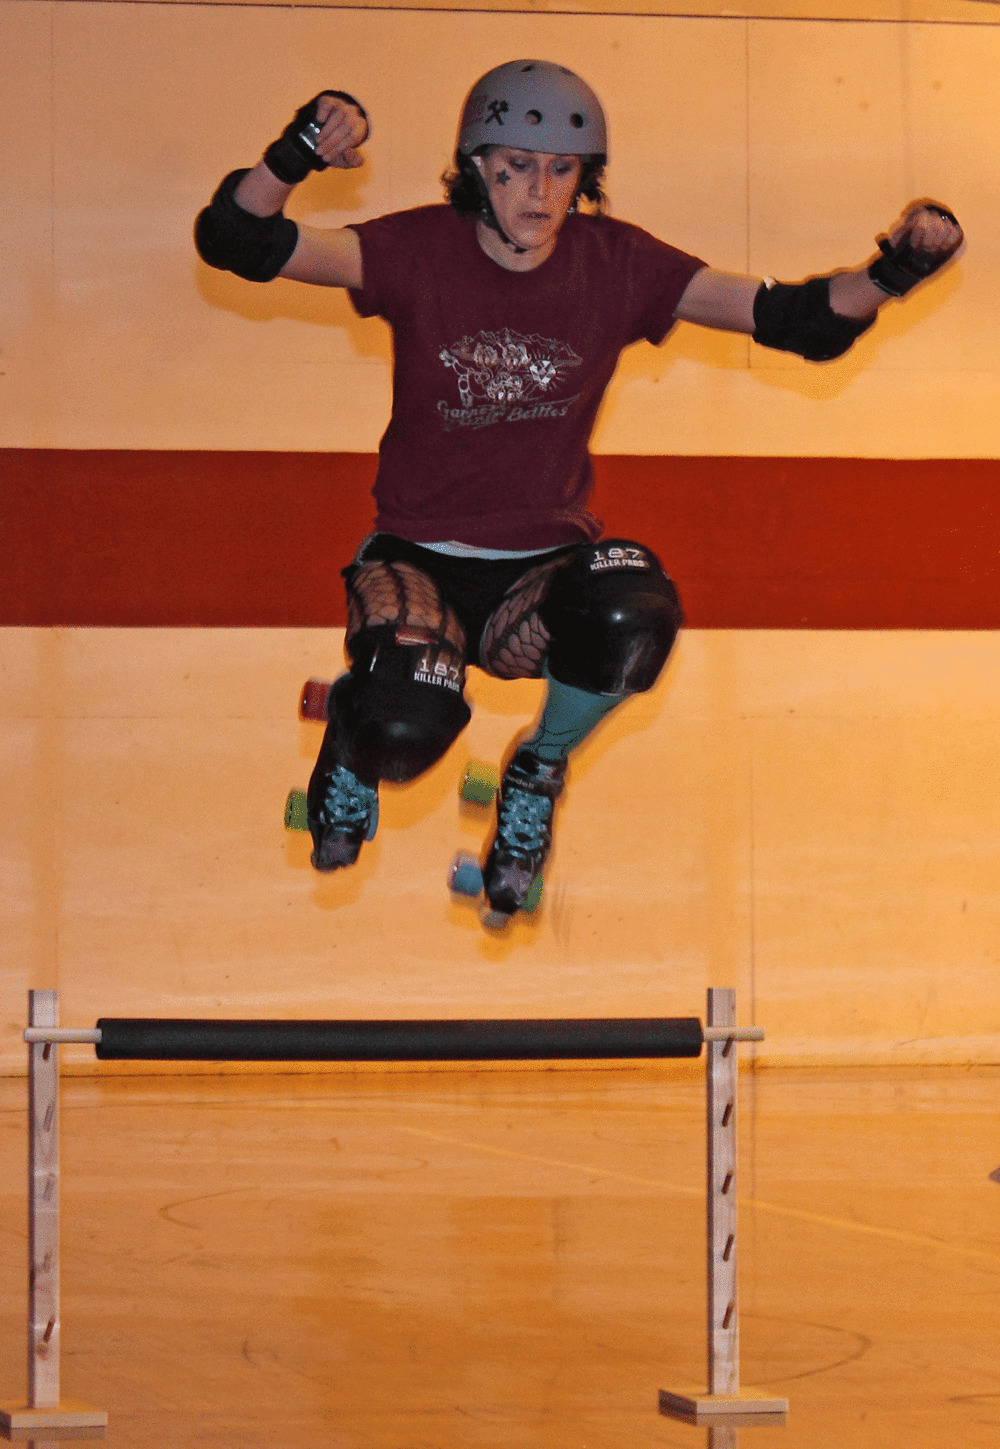 Kooks Deluxe of the Garnet Grit Betties Roller Derby Team practicing a jump.